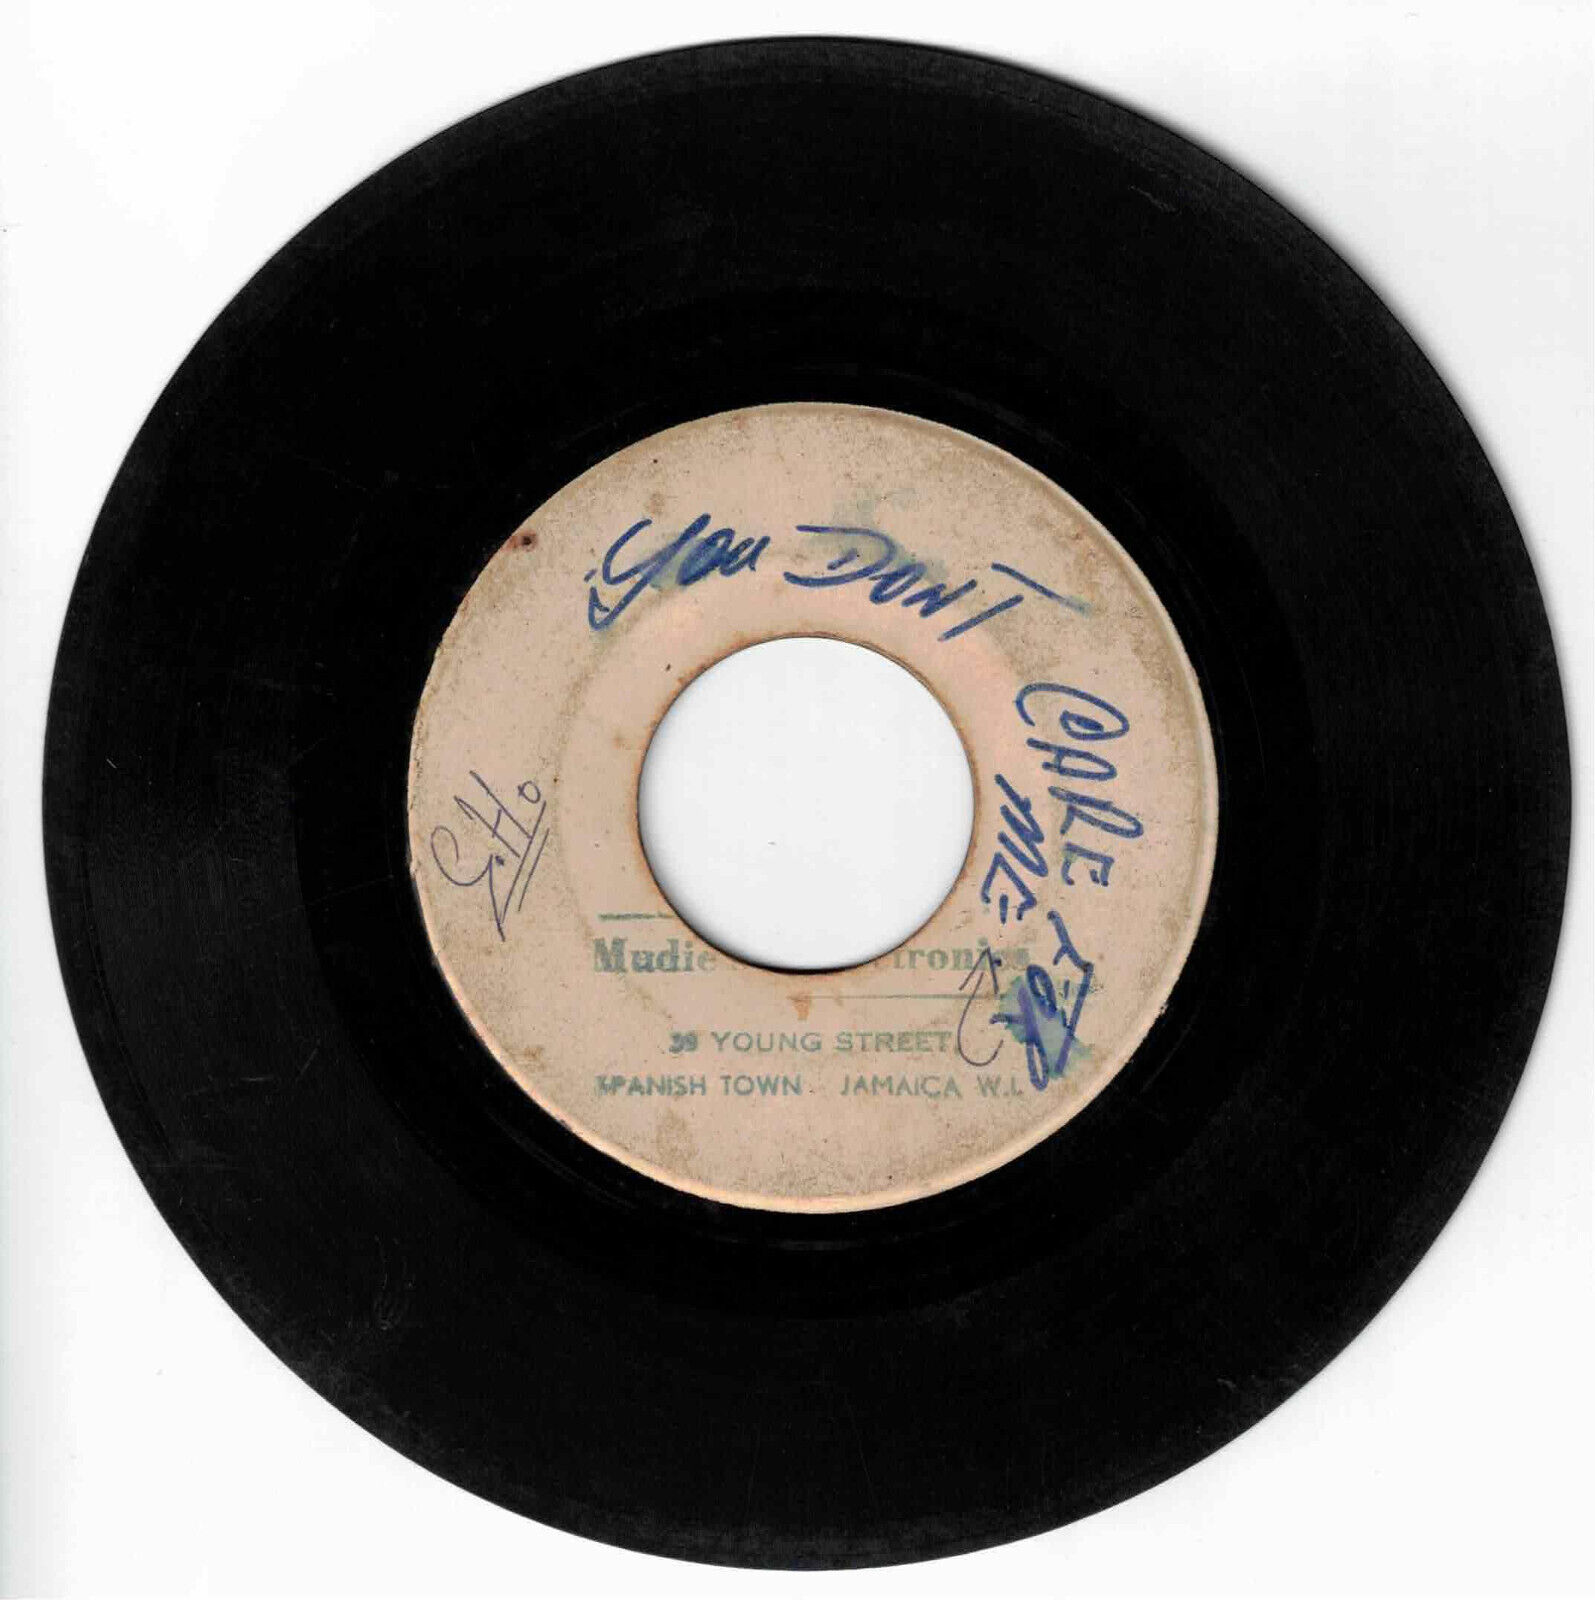 #50 ROCKSTEADY BLANK 1967 TOMMY McCOOK & THE SUPERSONICS " DON ON BOND STREET "